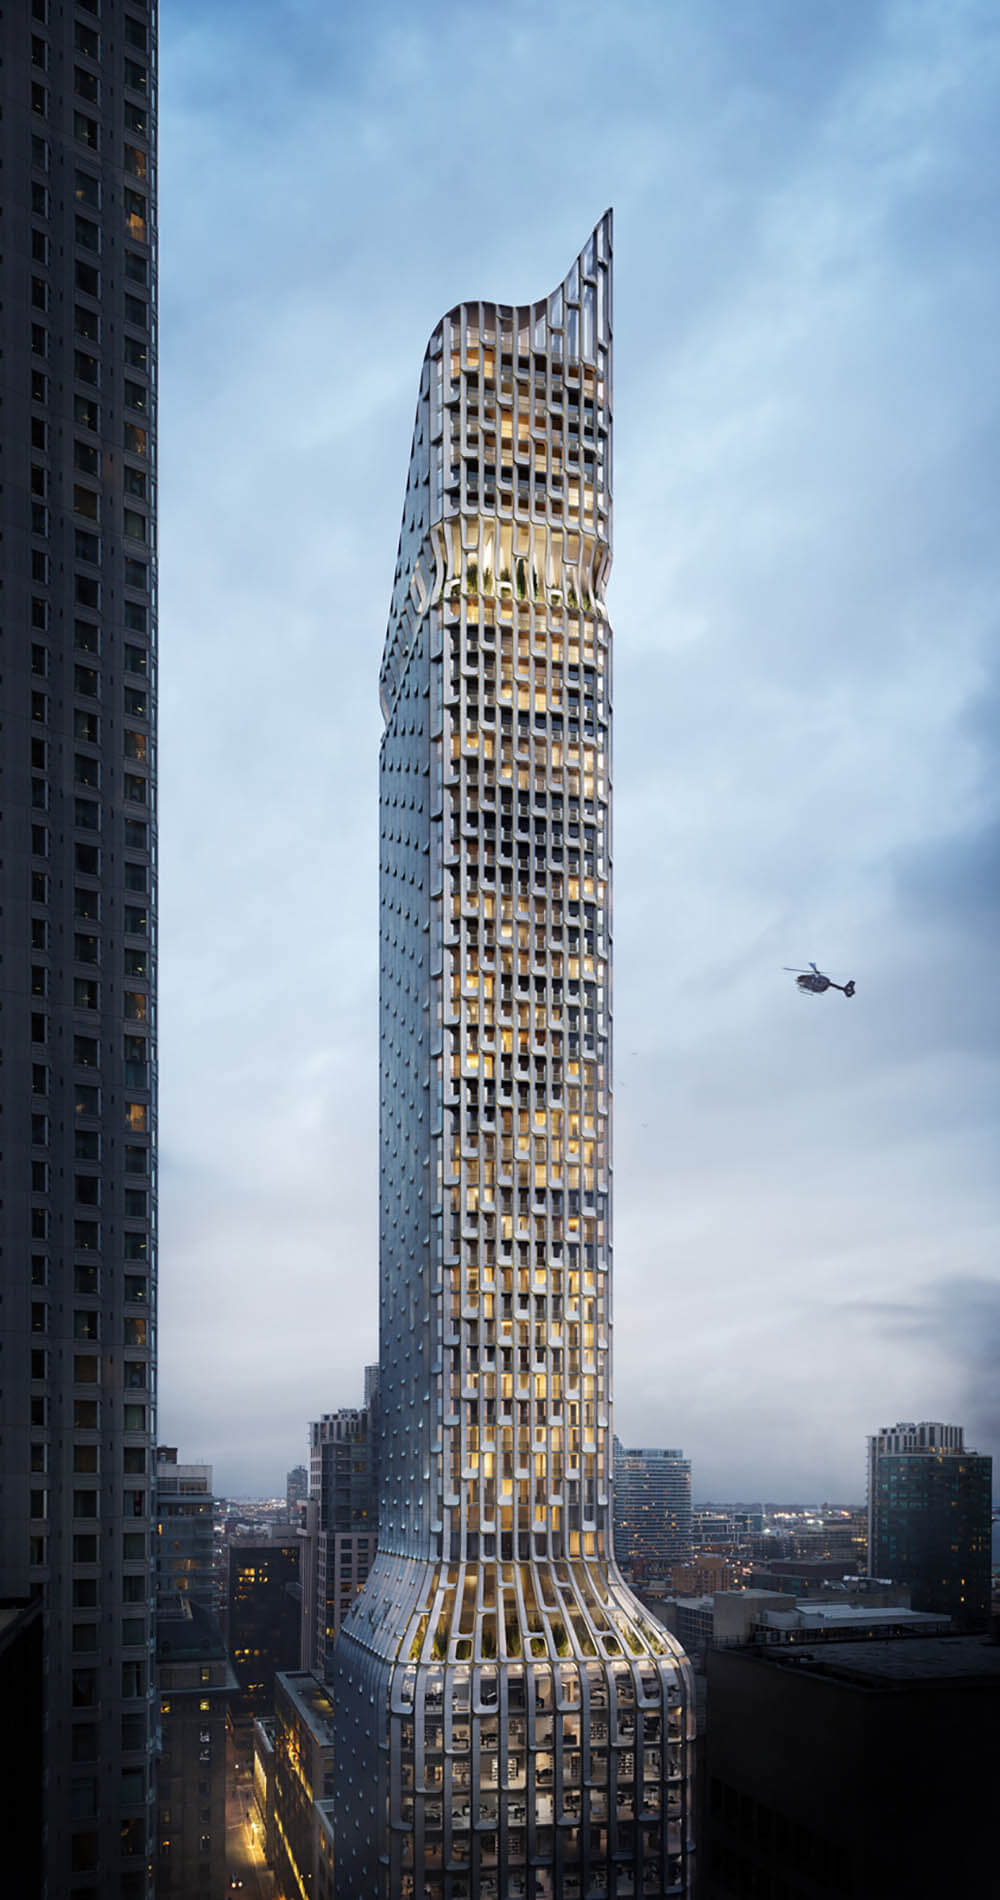 rendering of a futuristic skyscraper